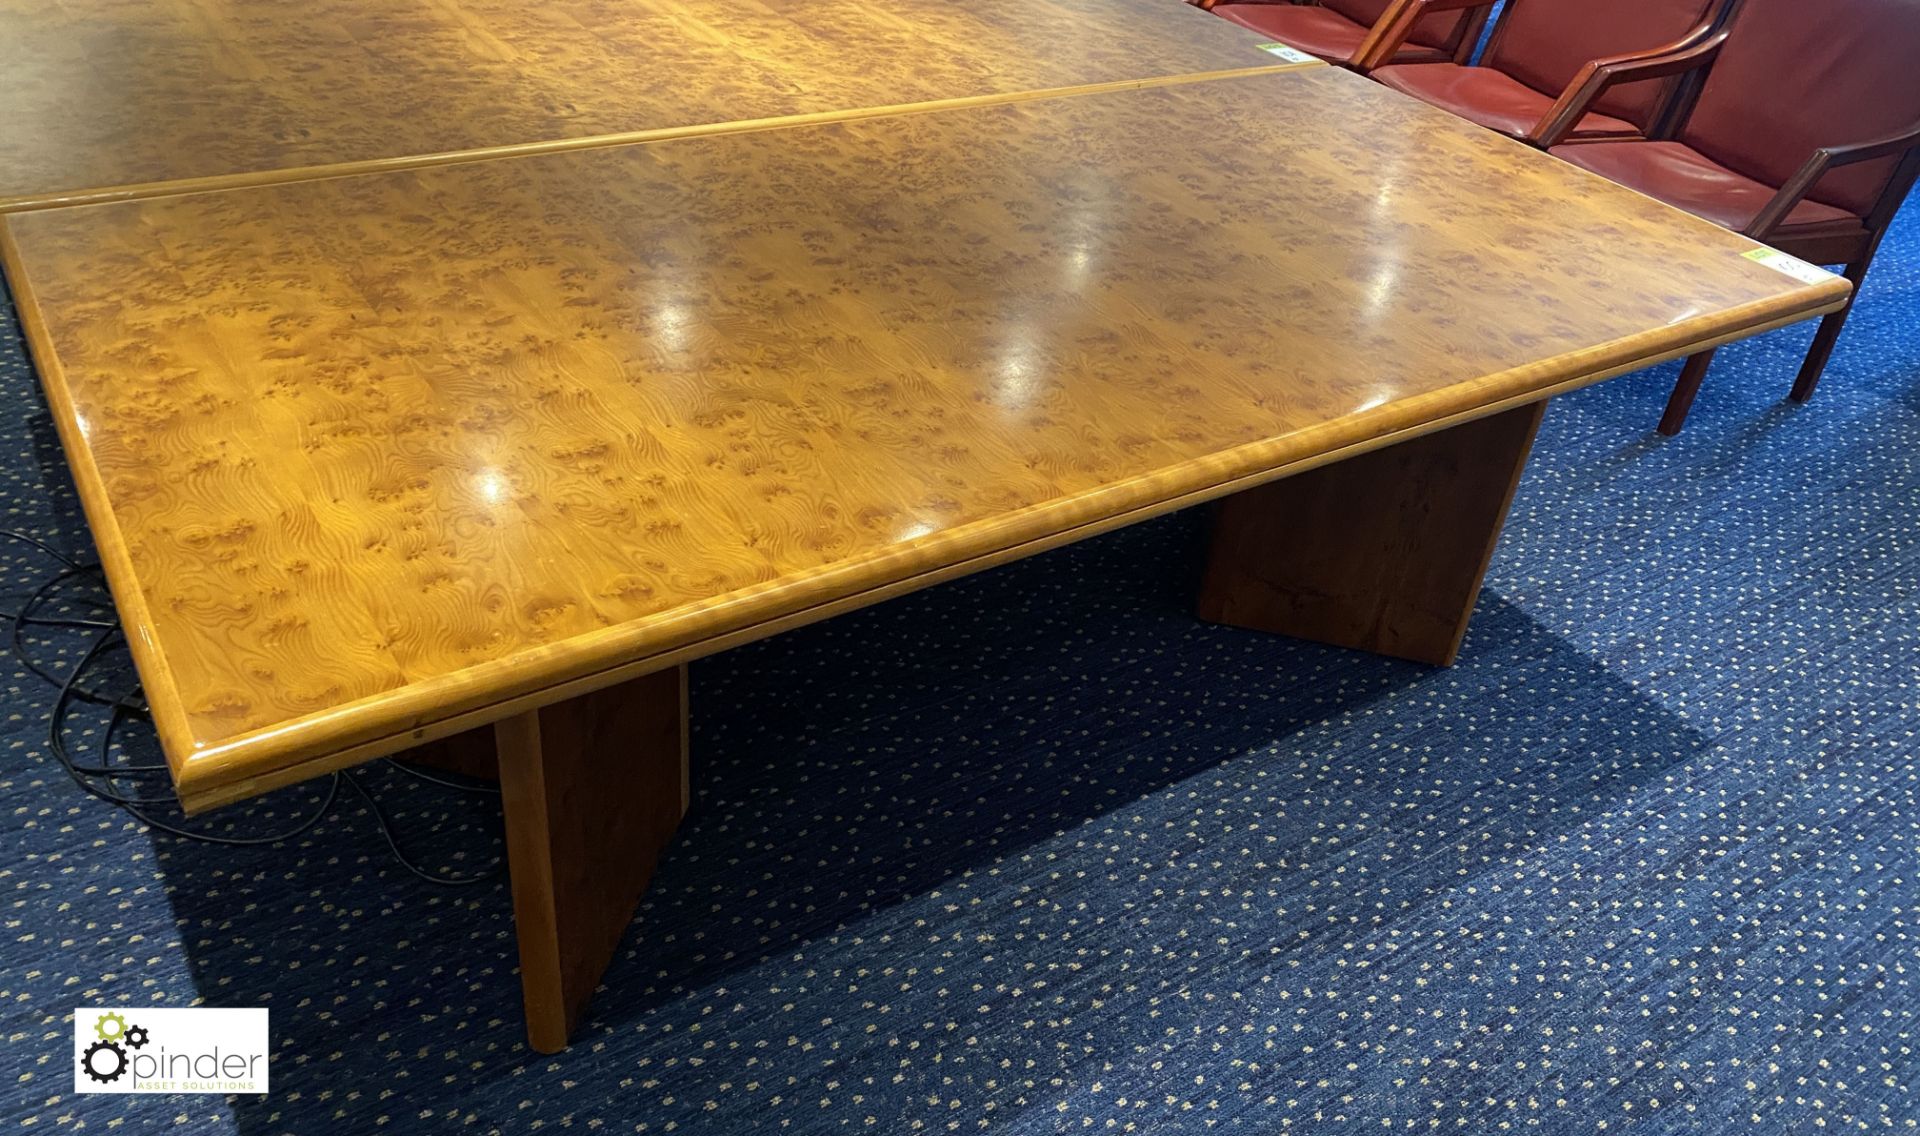 Burr walnut Meeting Table, 2100mm x 1000mm x 740mm (located in First Floor Boardroom/Meeting Room